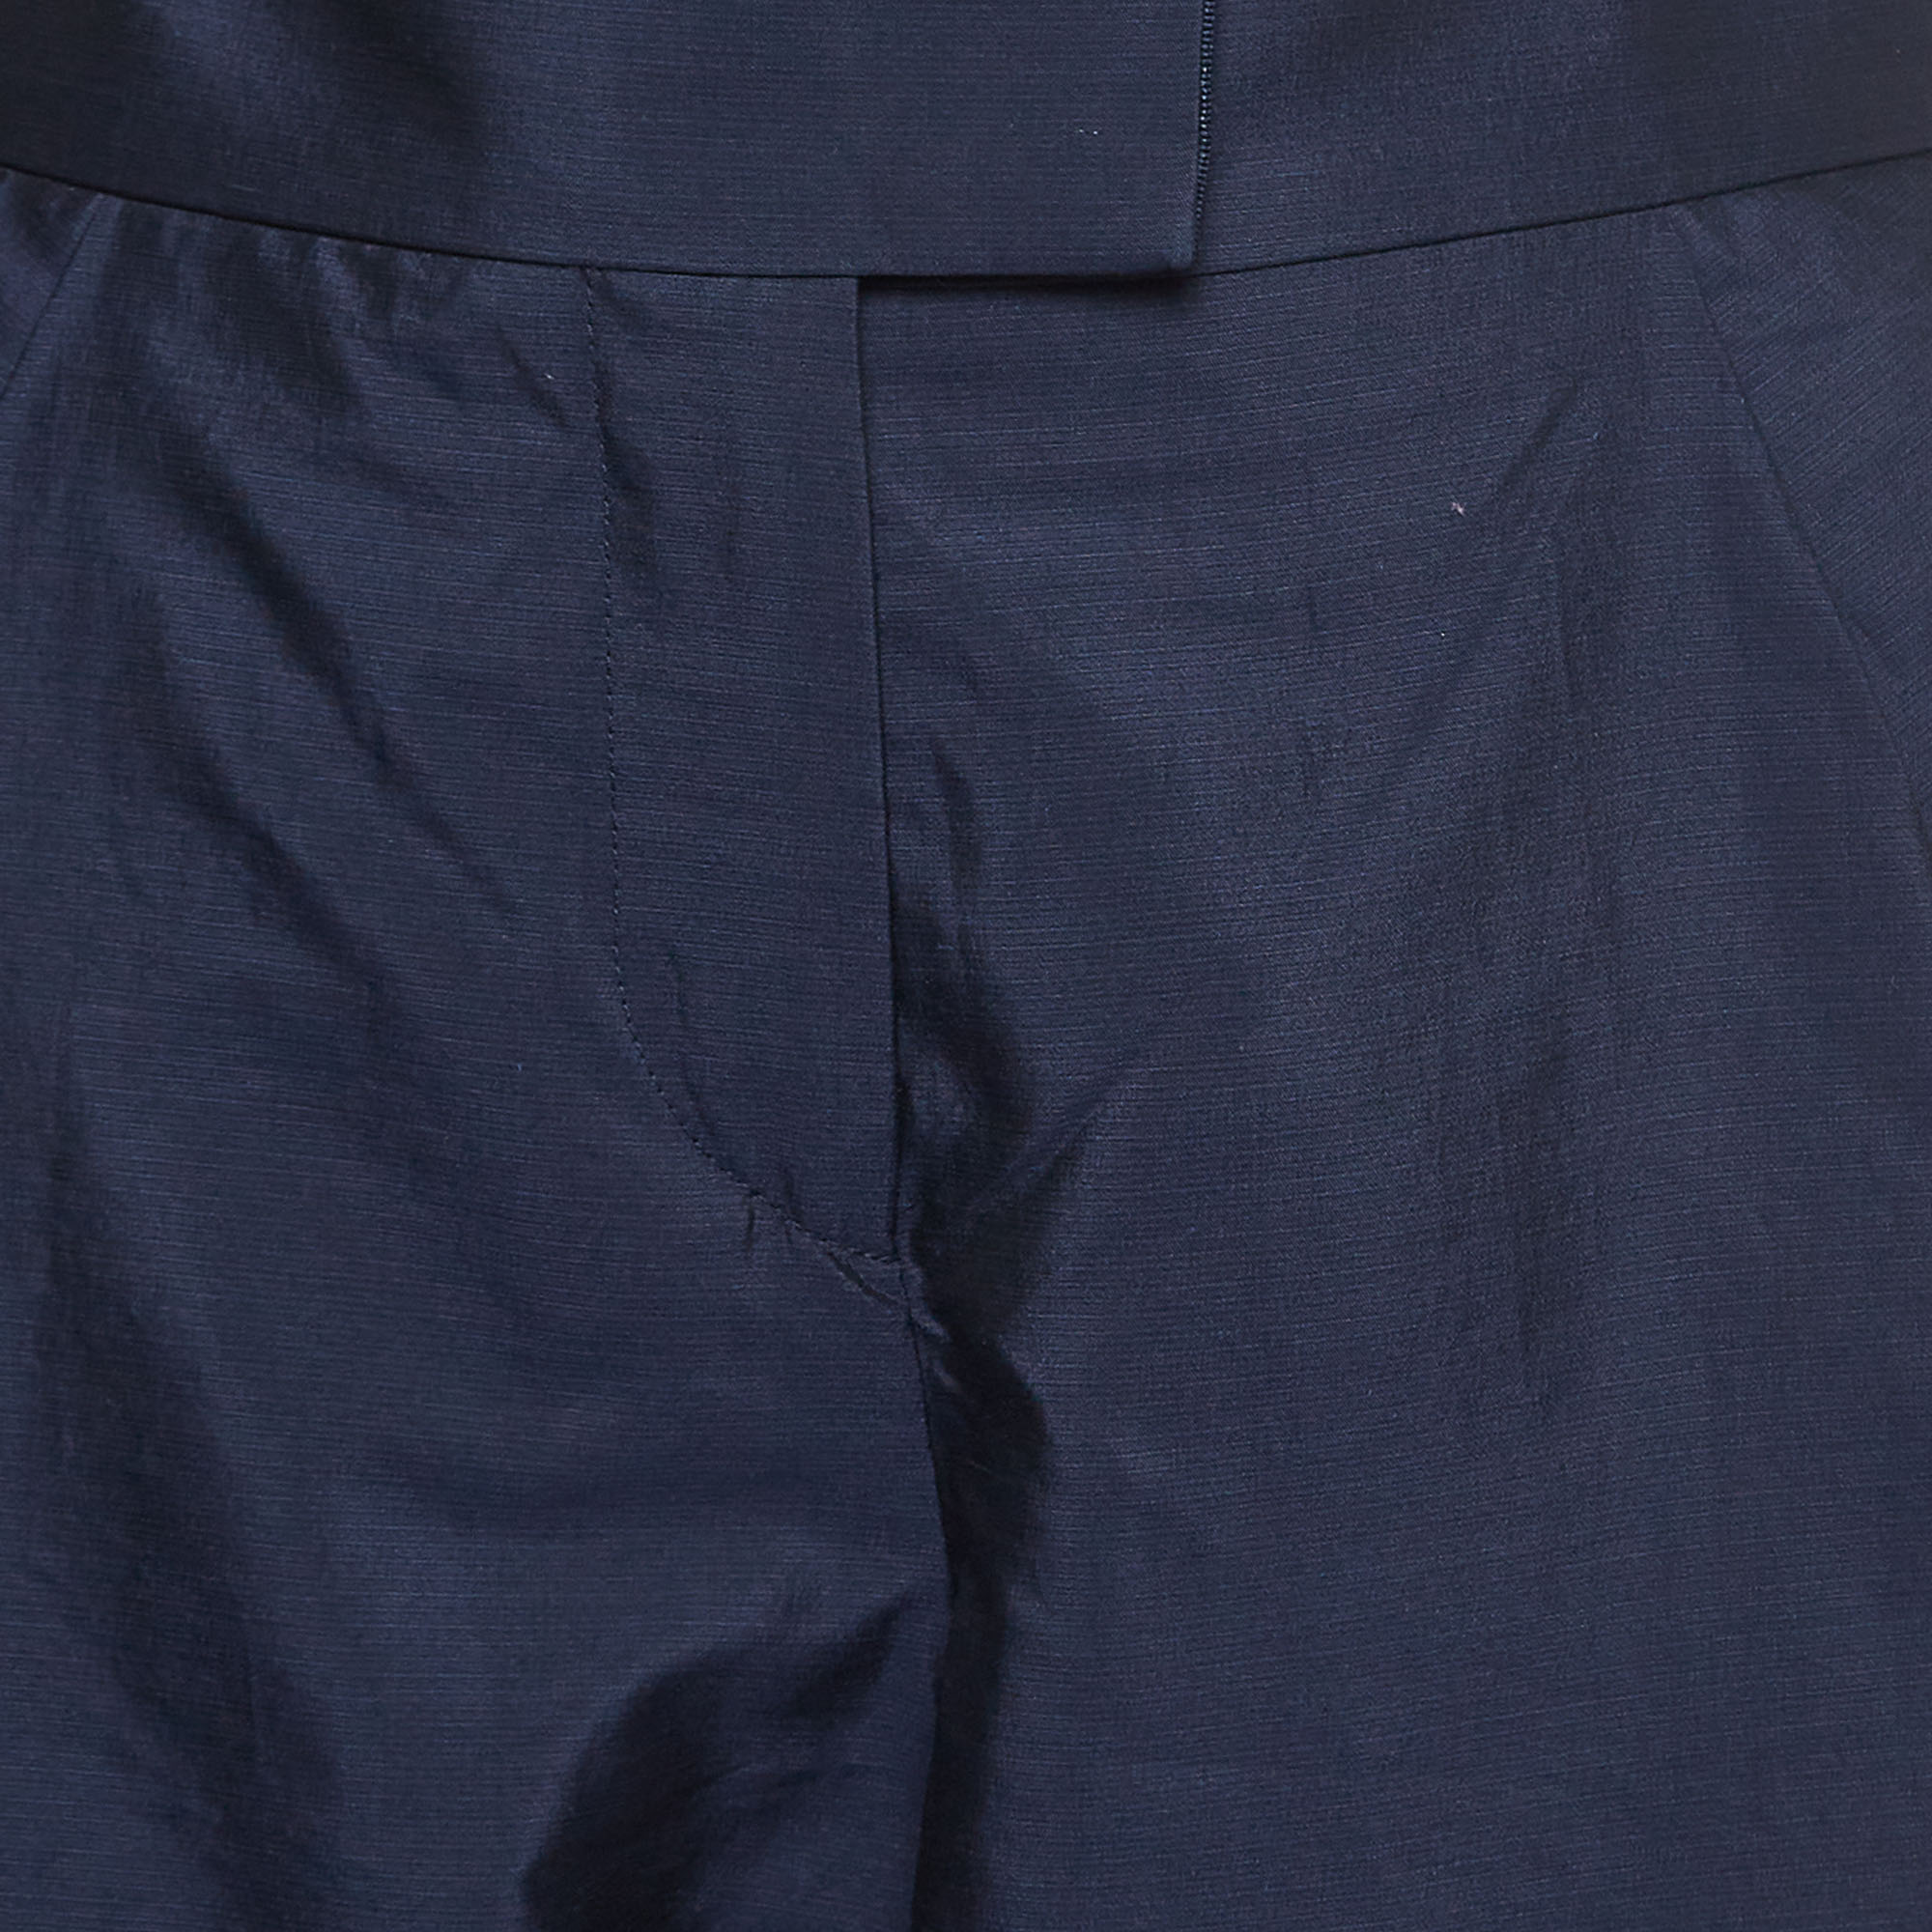 Giorgio Armani Navy Blue Silk Blend Trousers L